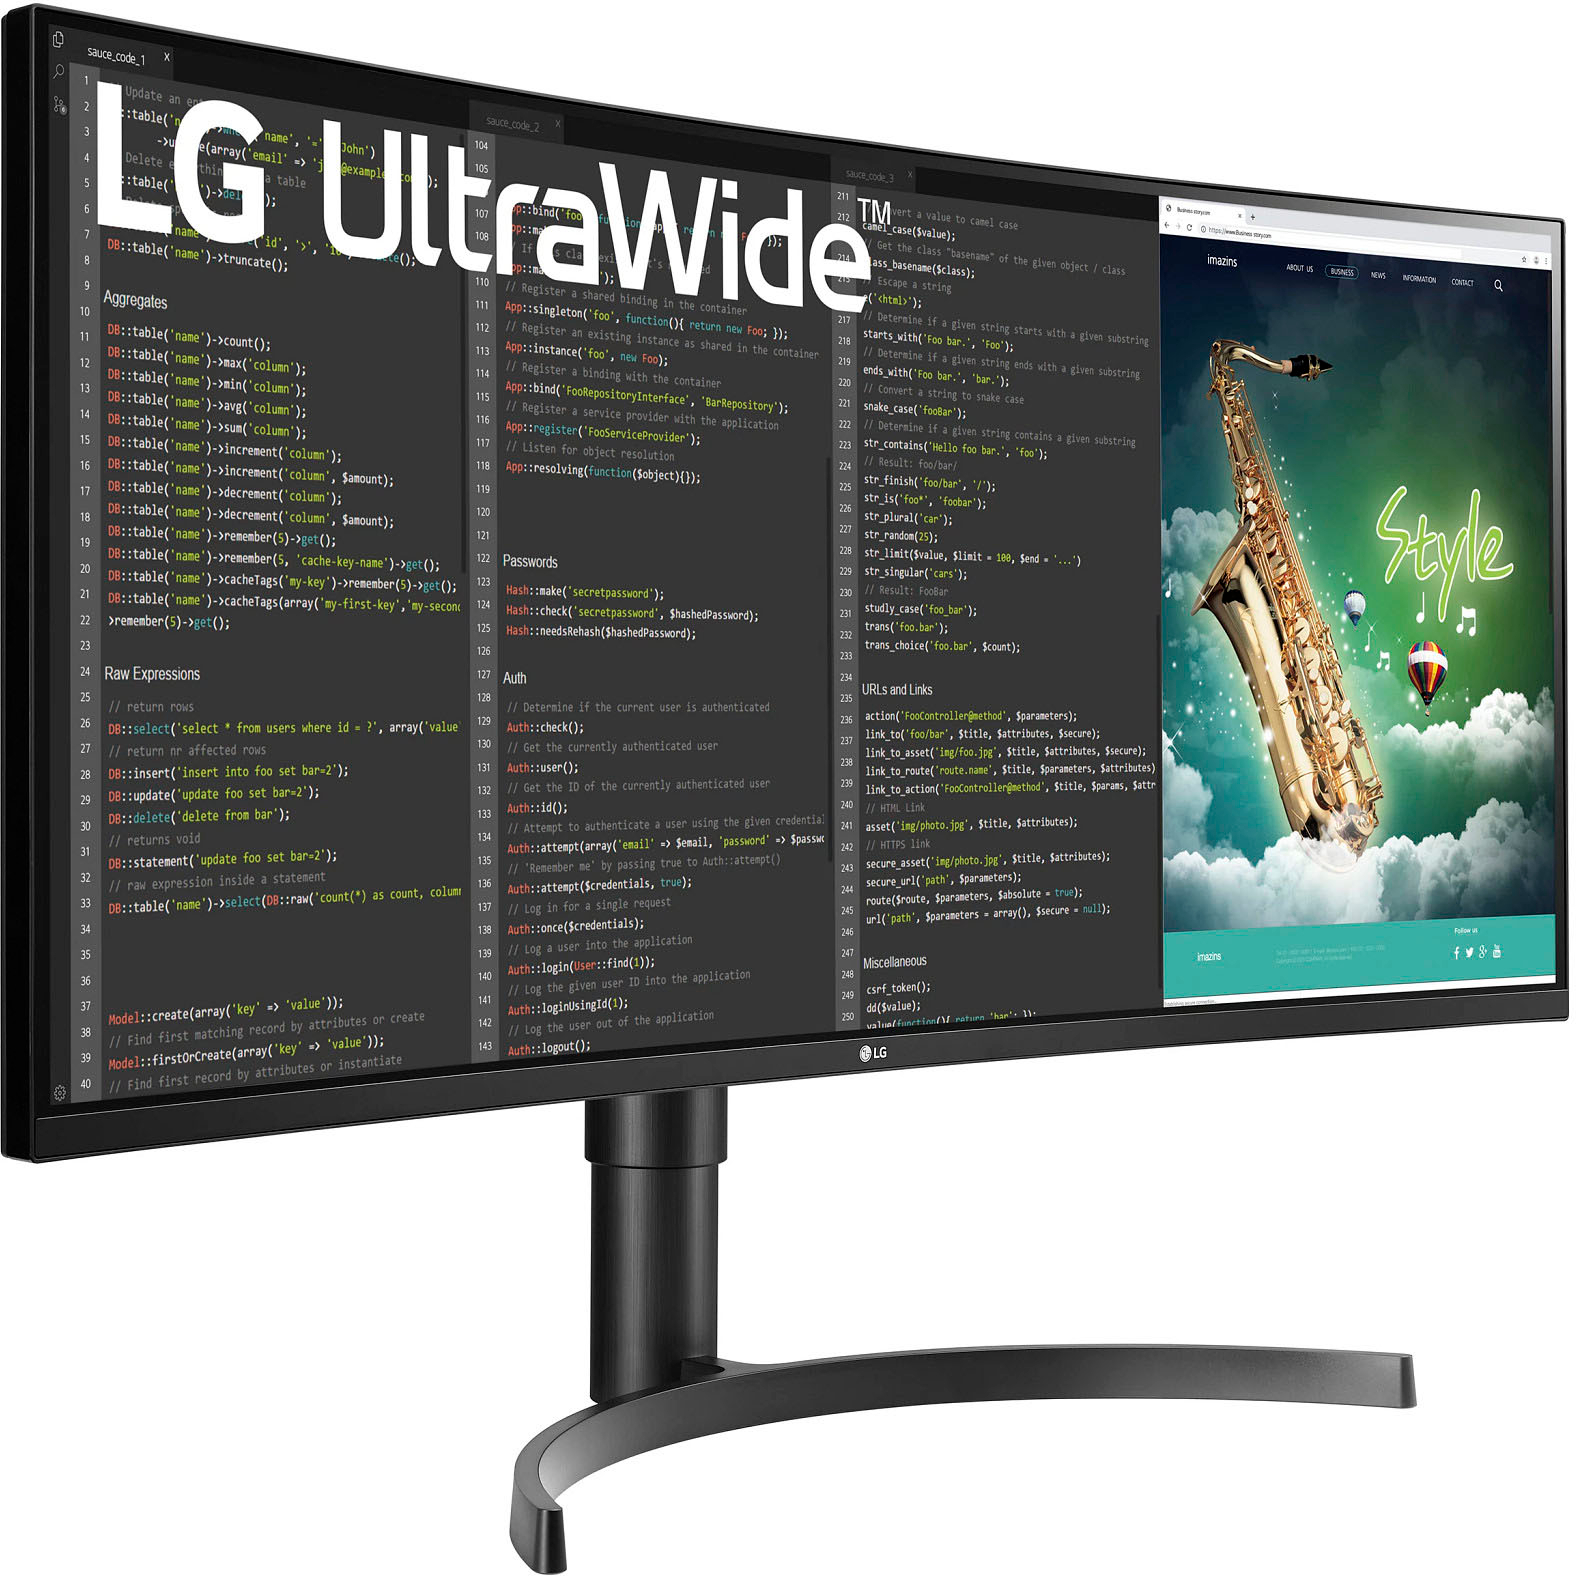 Angle View: LG - 35" LED Curved UltraWide QHD AMD Freesync Monitor with HDR (HDMI, DisplayPort, USB) - Black